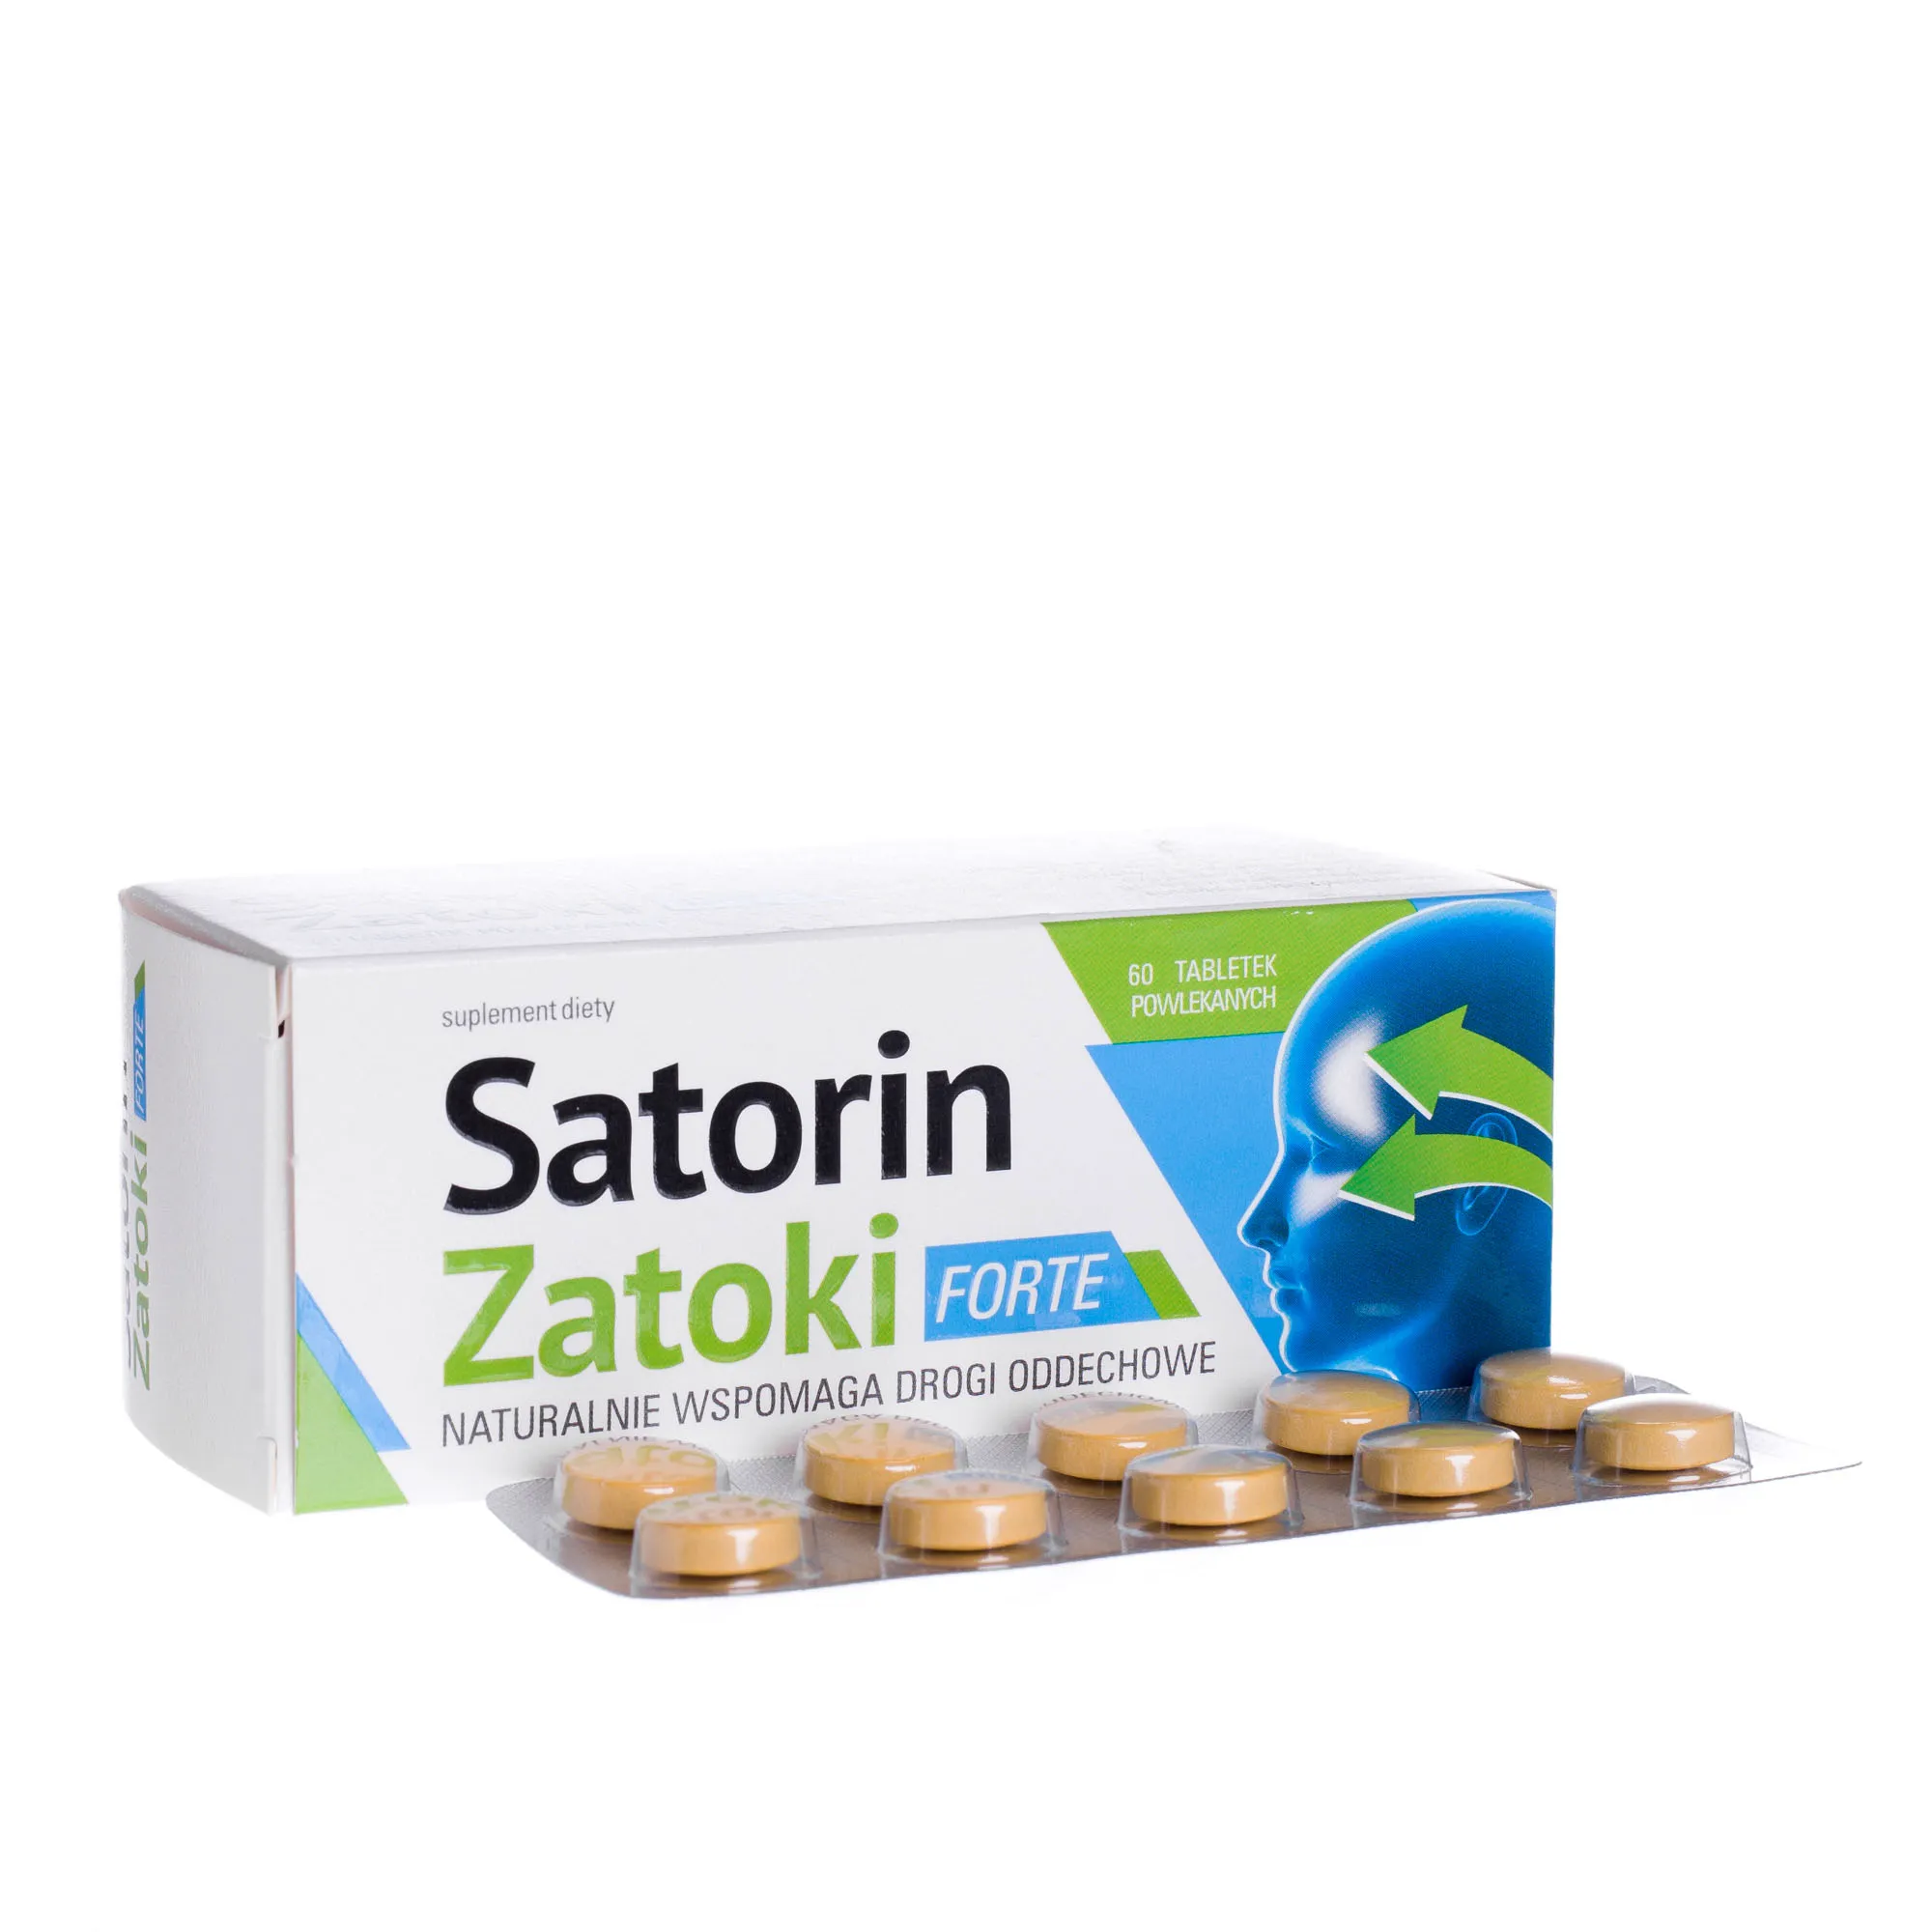 Satorin Zatoki forte, suplement diety, 60 tabletek powlekanych